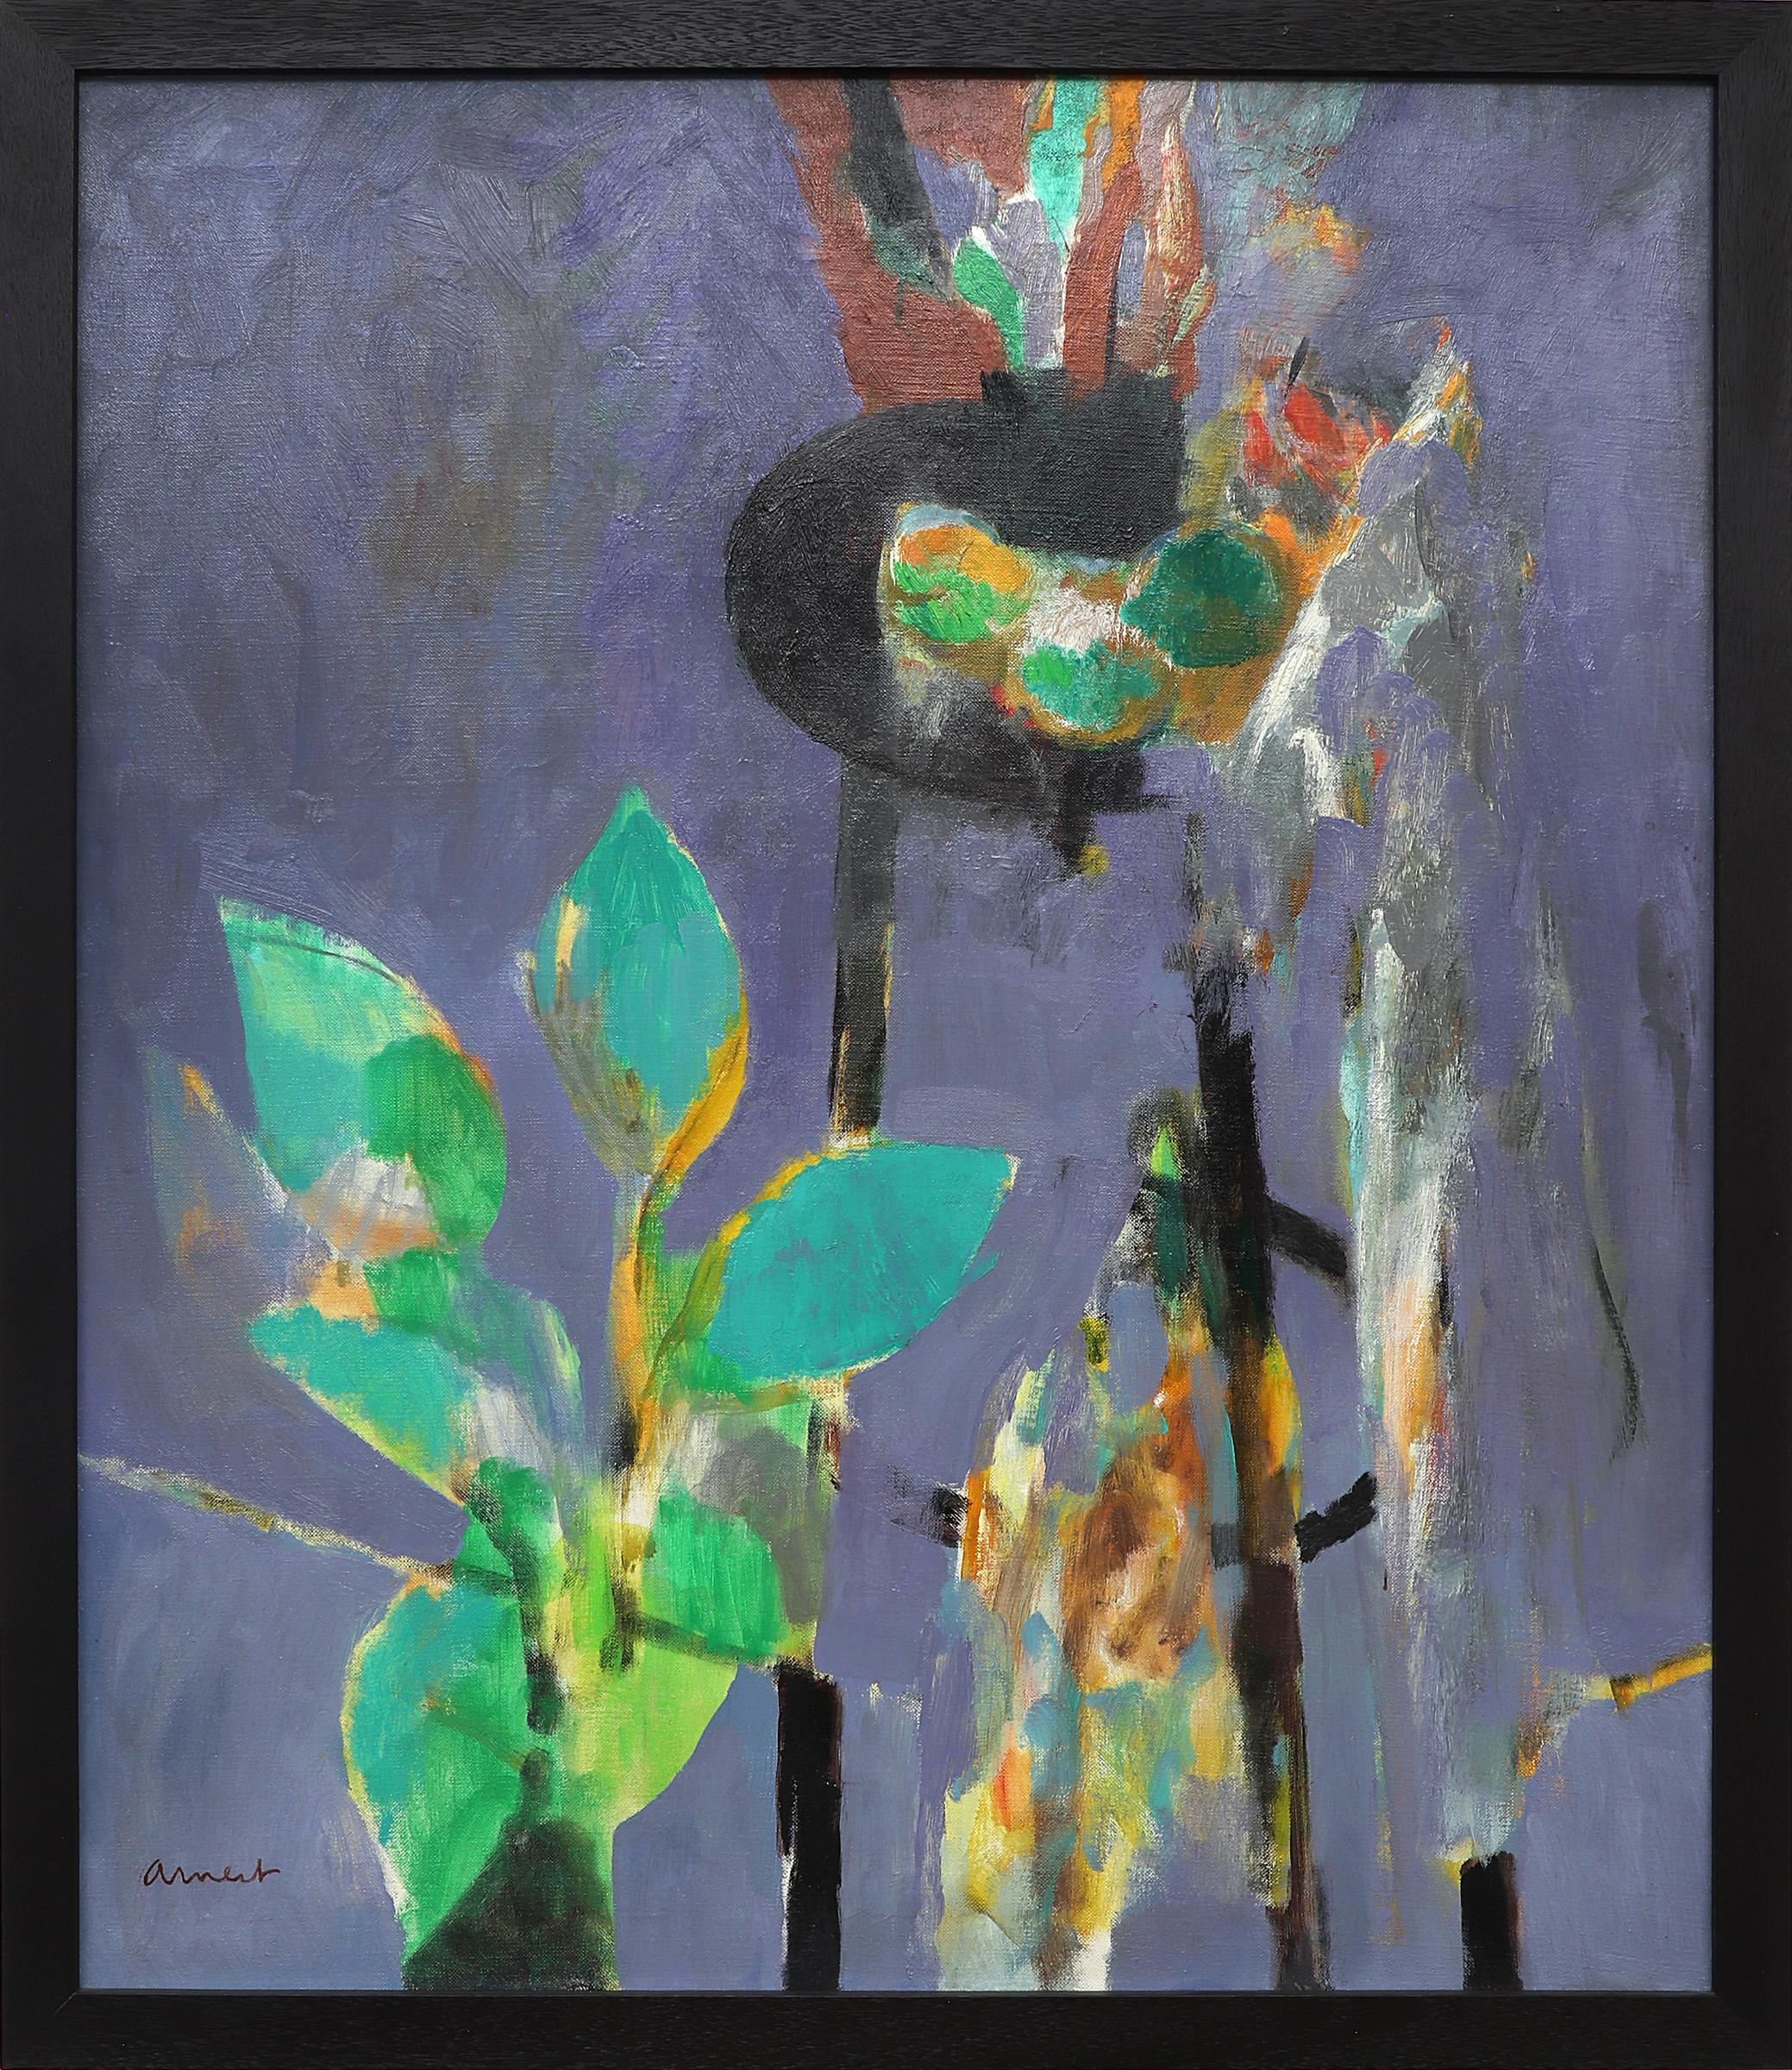 Bernard Arnest Abstract Painting – 1950er Jahre Gerahmtes Abstraktes Stillleben Ölgemälde, Blau Grün Schwarz Orange Weiß